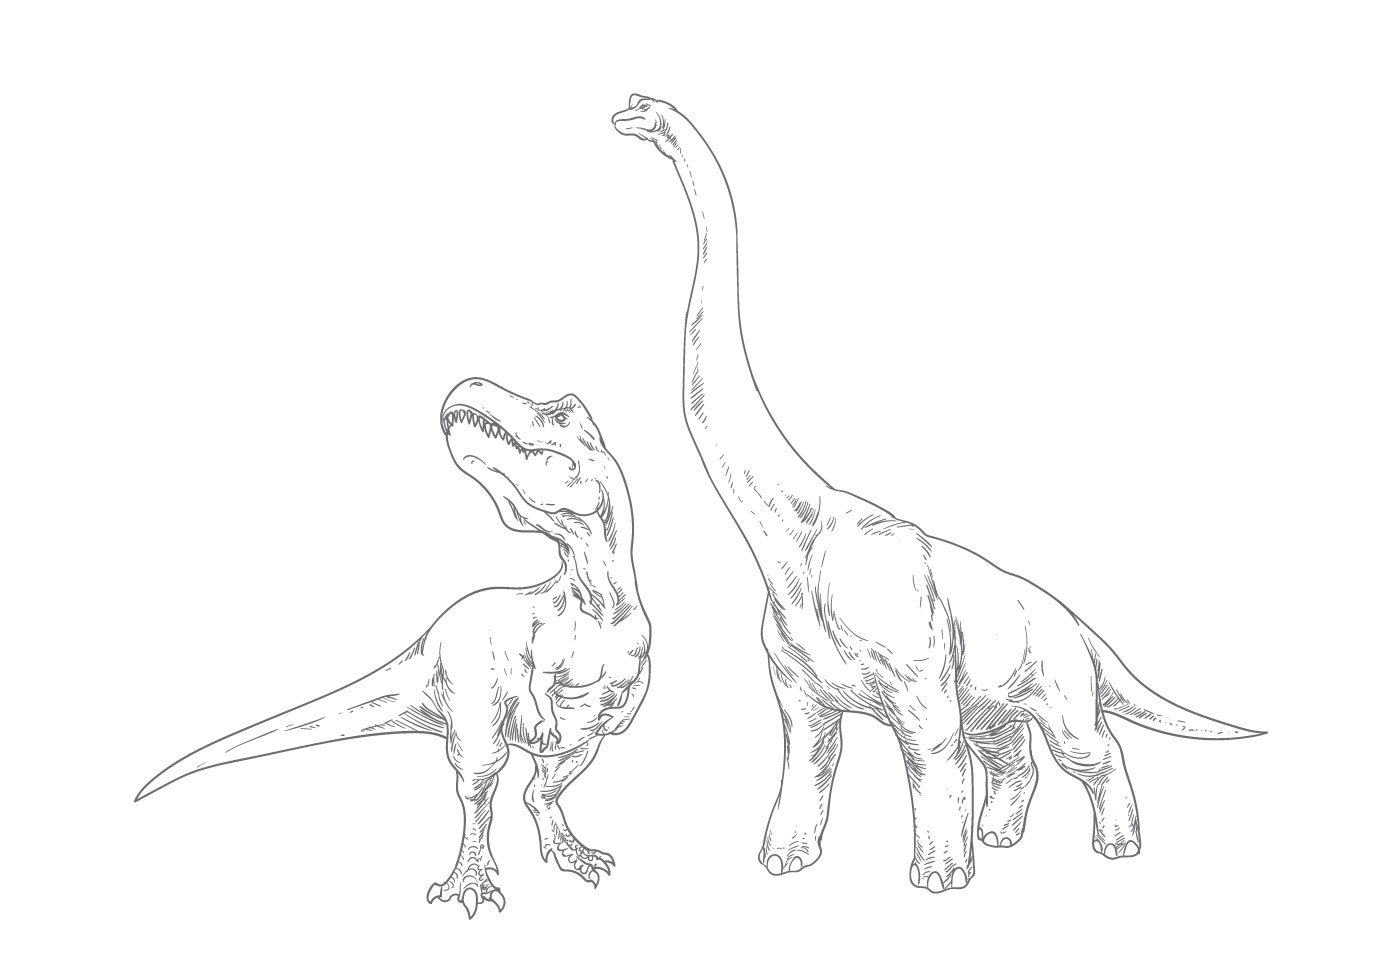 Dinossauro desenho realista 241221 Vetor no Vecteezy